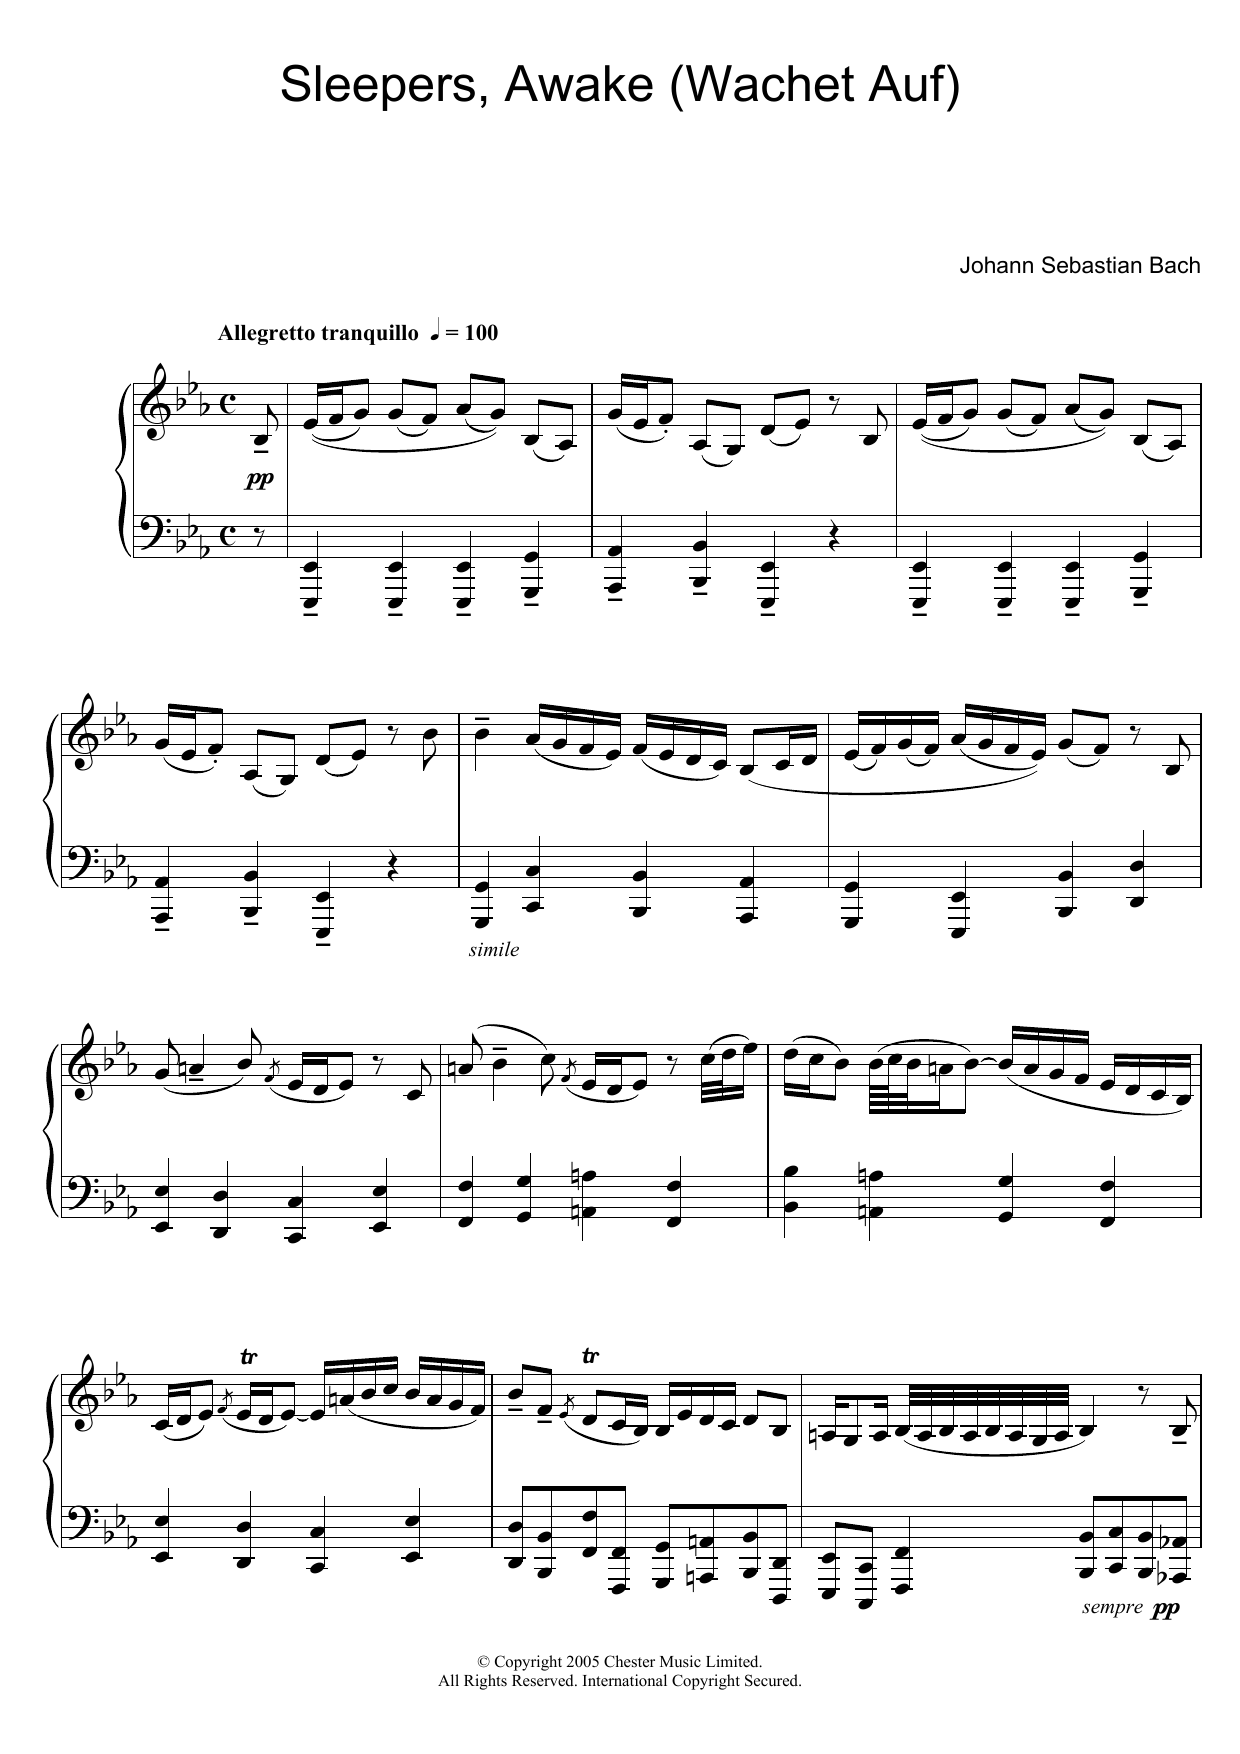 Johann Sebastian Bach Sleepers, Awake (Wachet Auf) Sheet Music Notes & Chords for Piano - Download or Print PDF